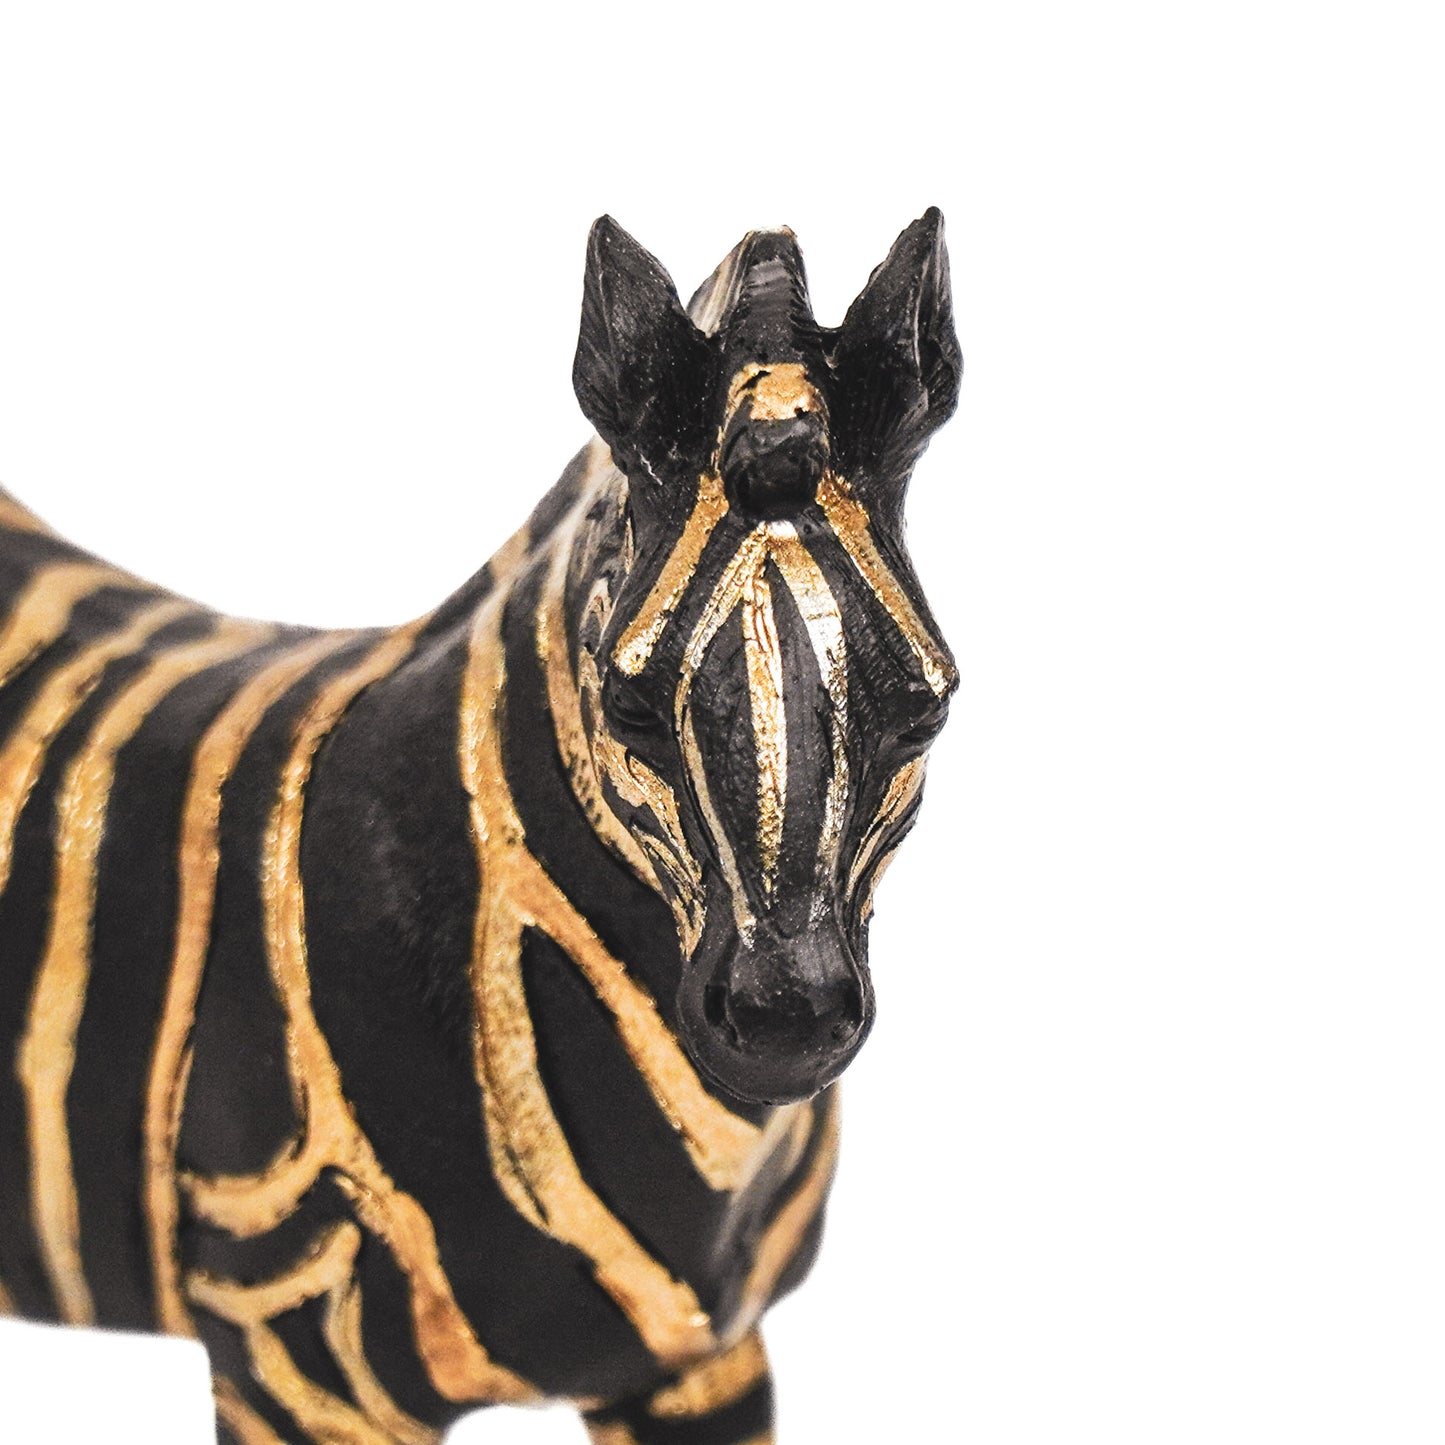 HV Zebra Figurine - Black - 13,5x4x12cm